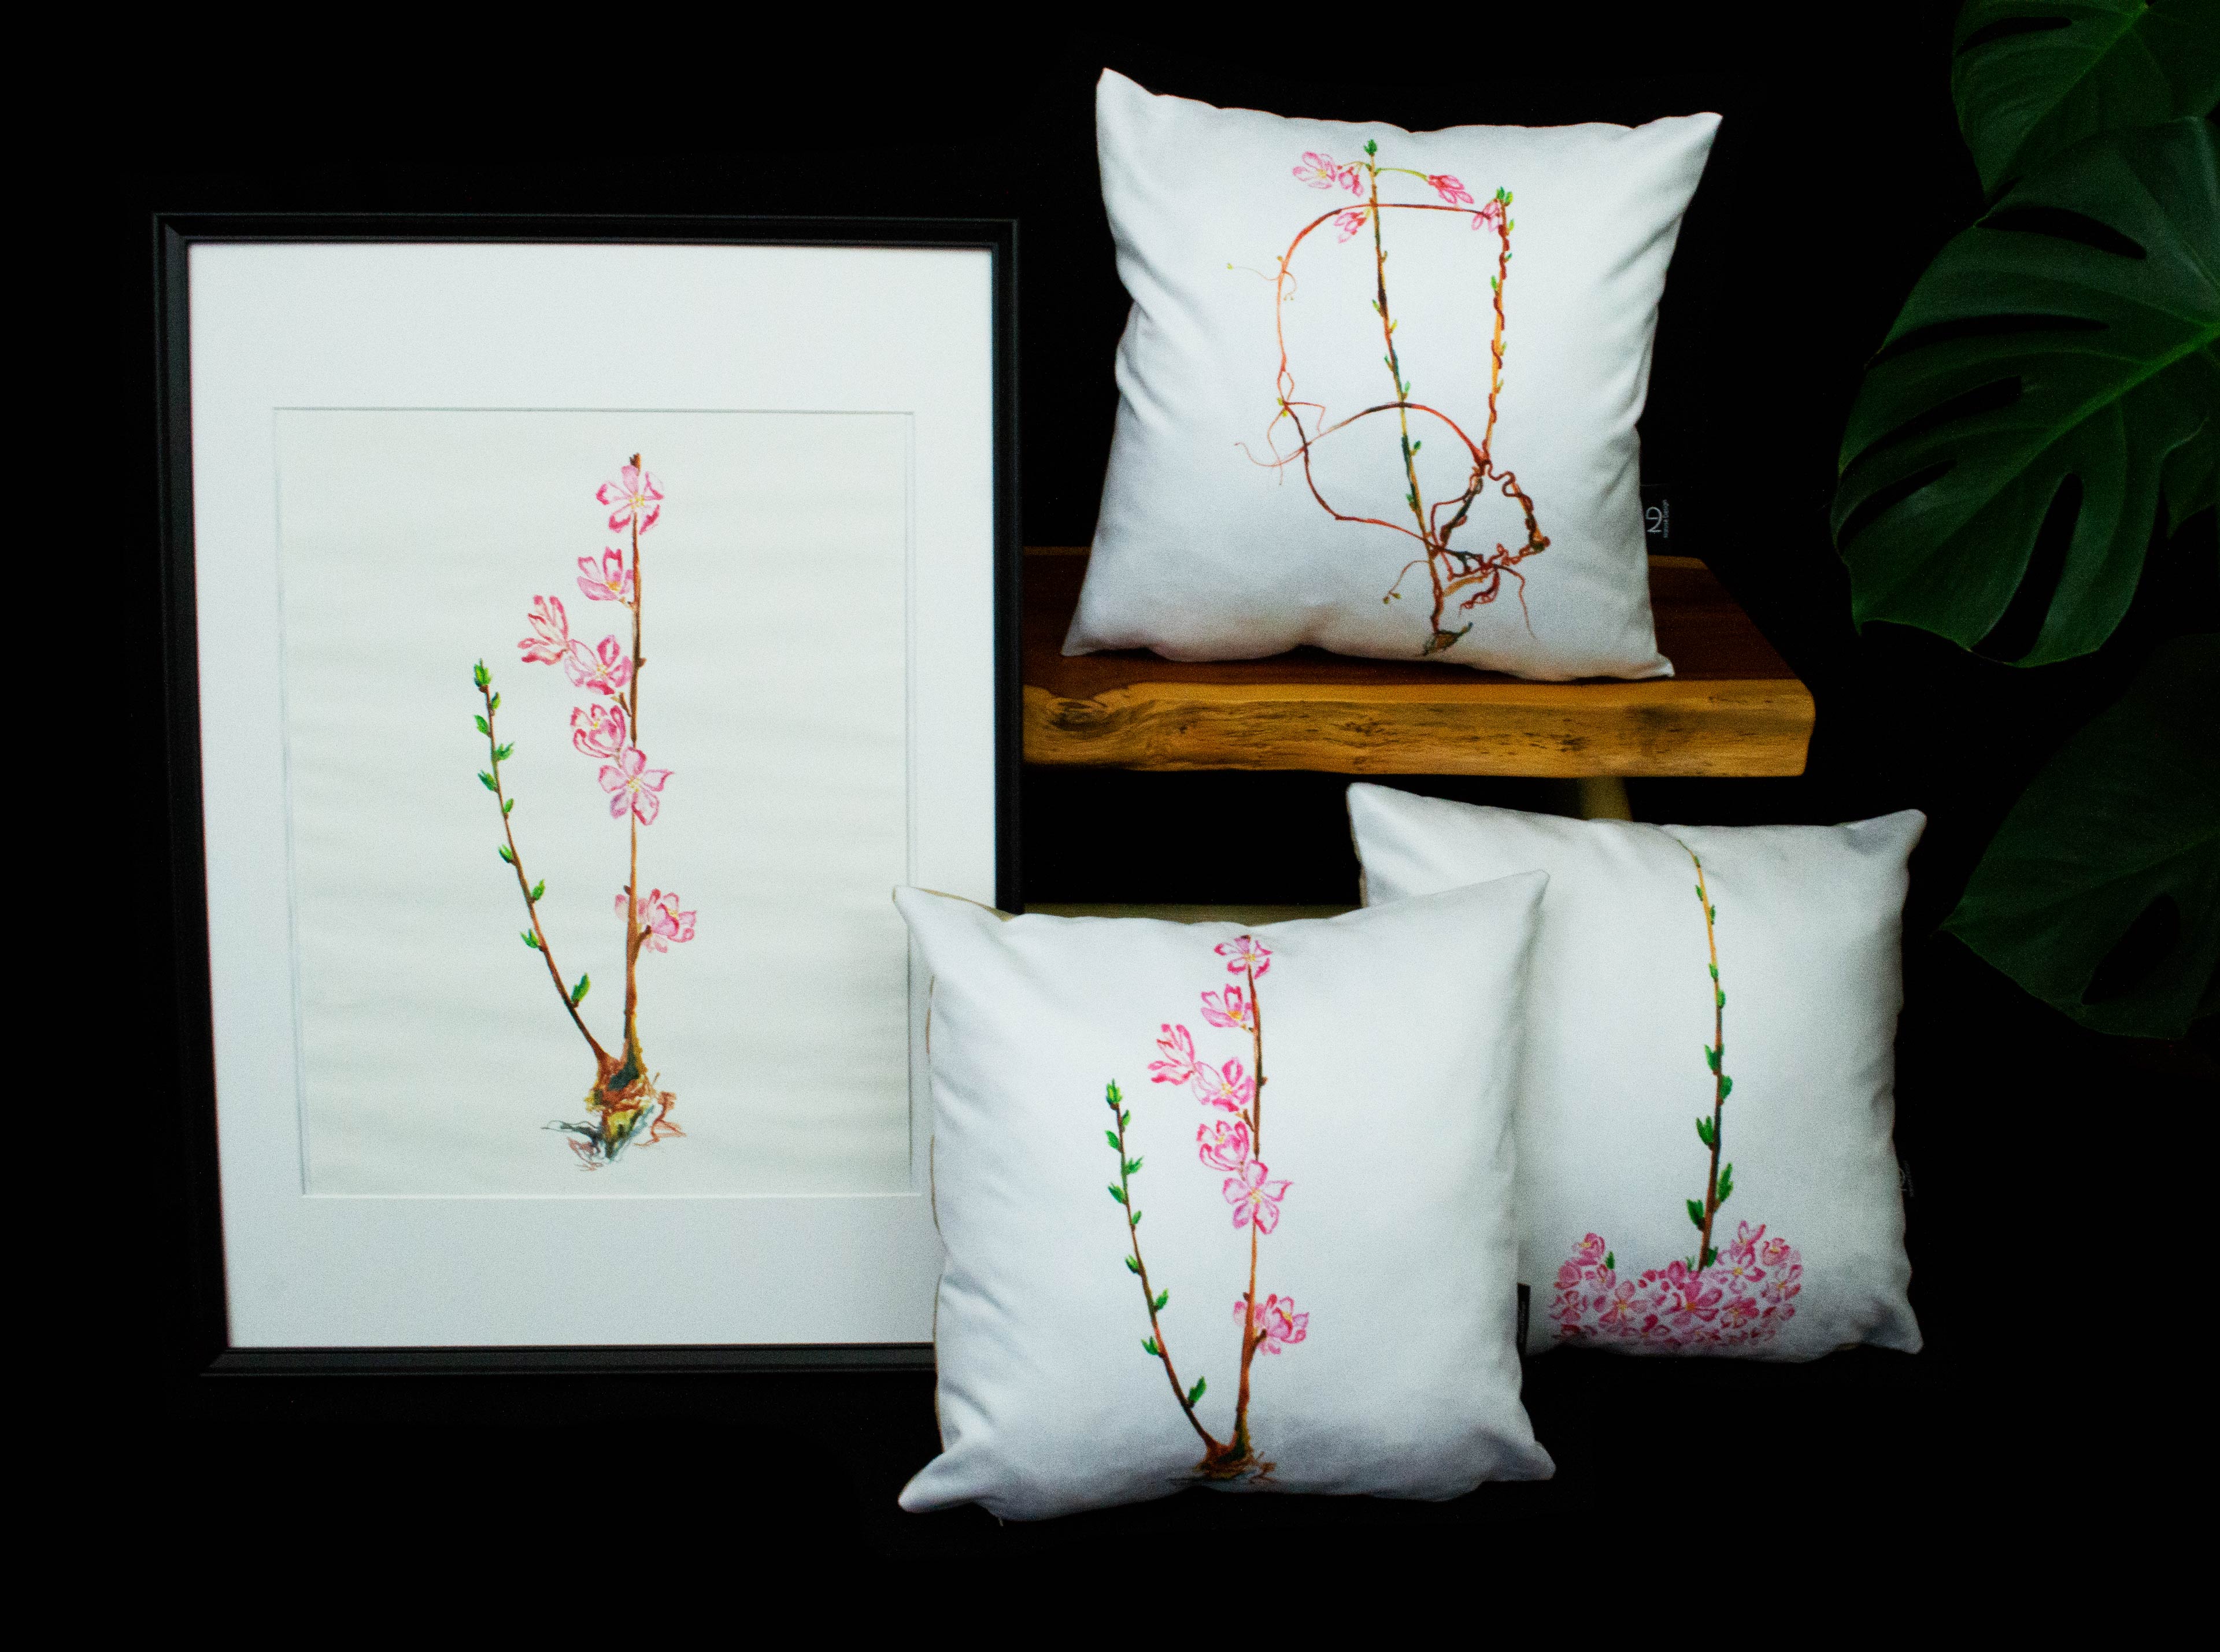 Sakura painting 3 framed displayed next to three sakura cushions.